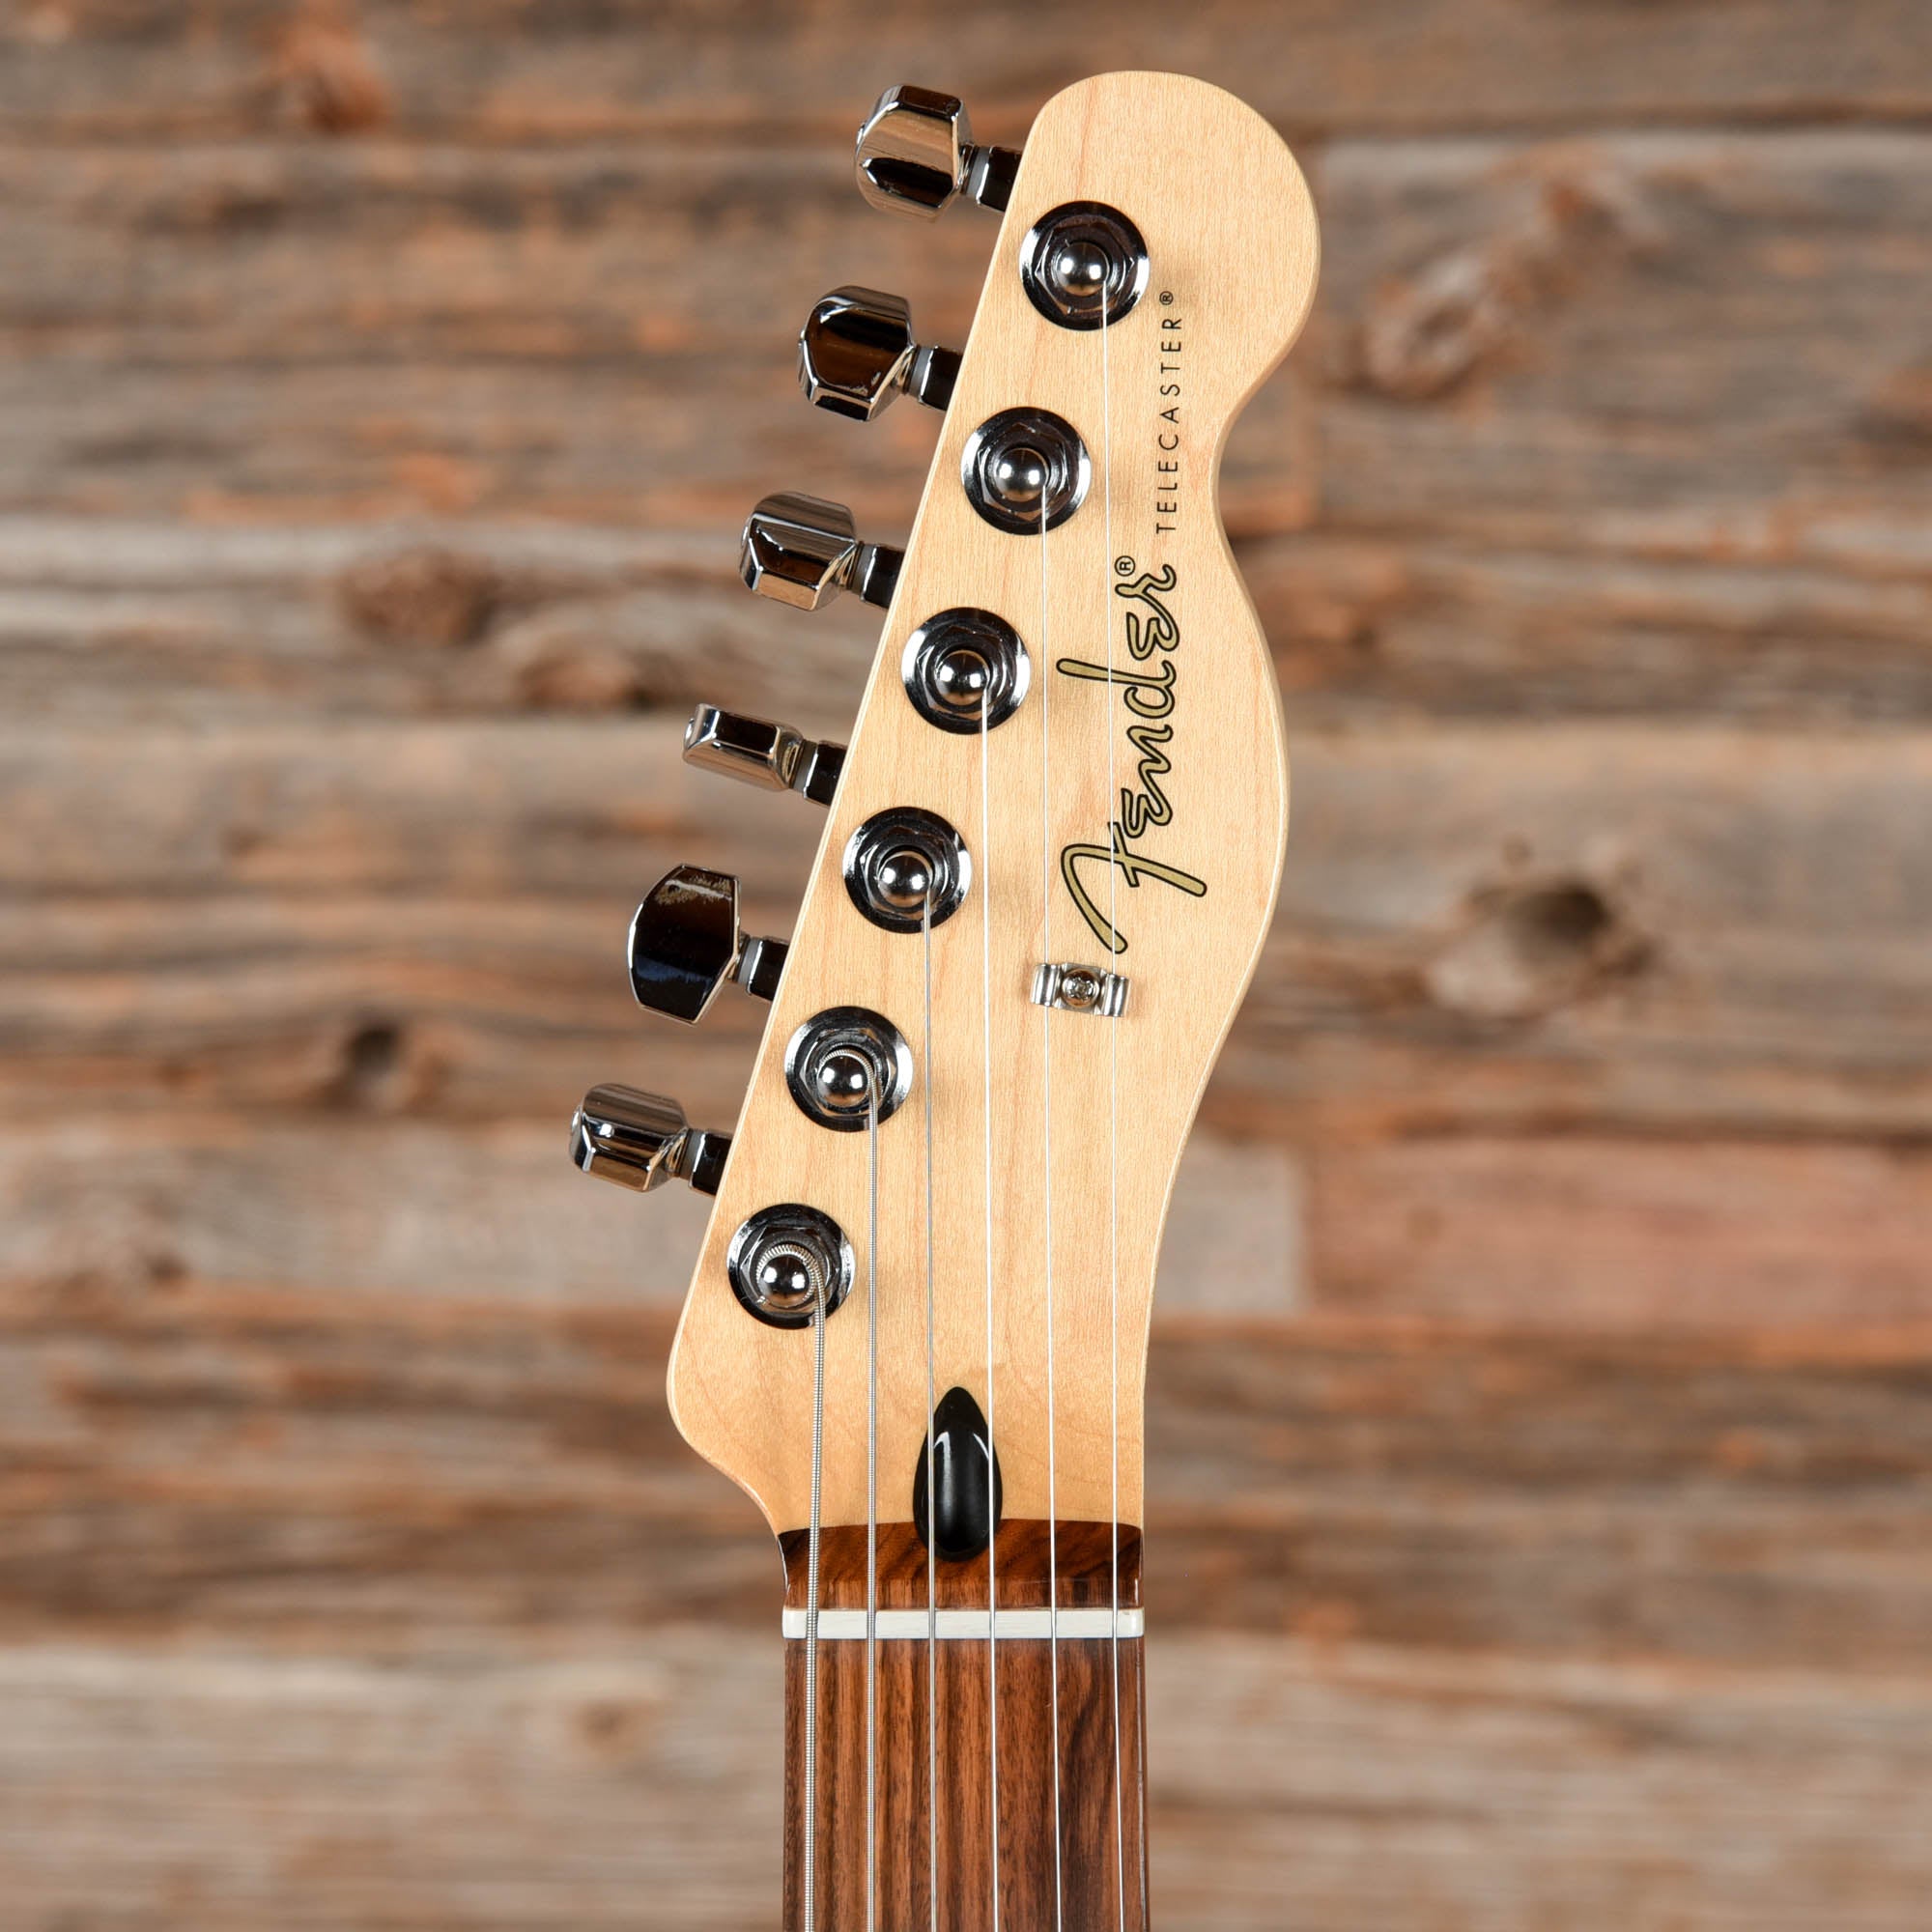 Fender Player Telecaster Daphne Blue 2021